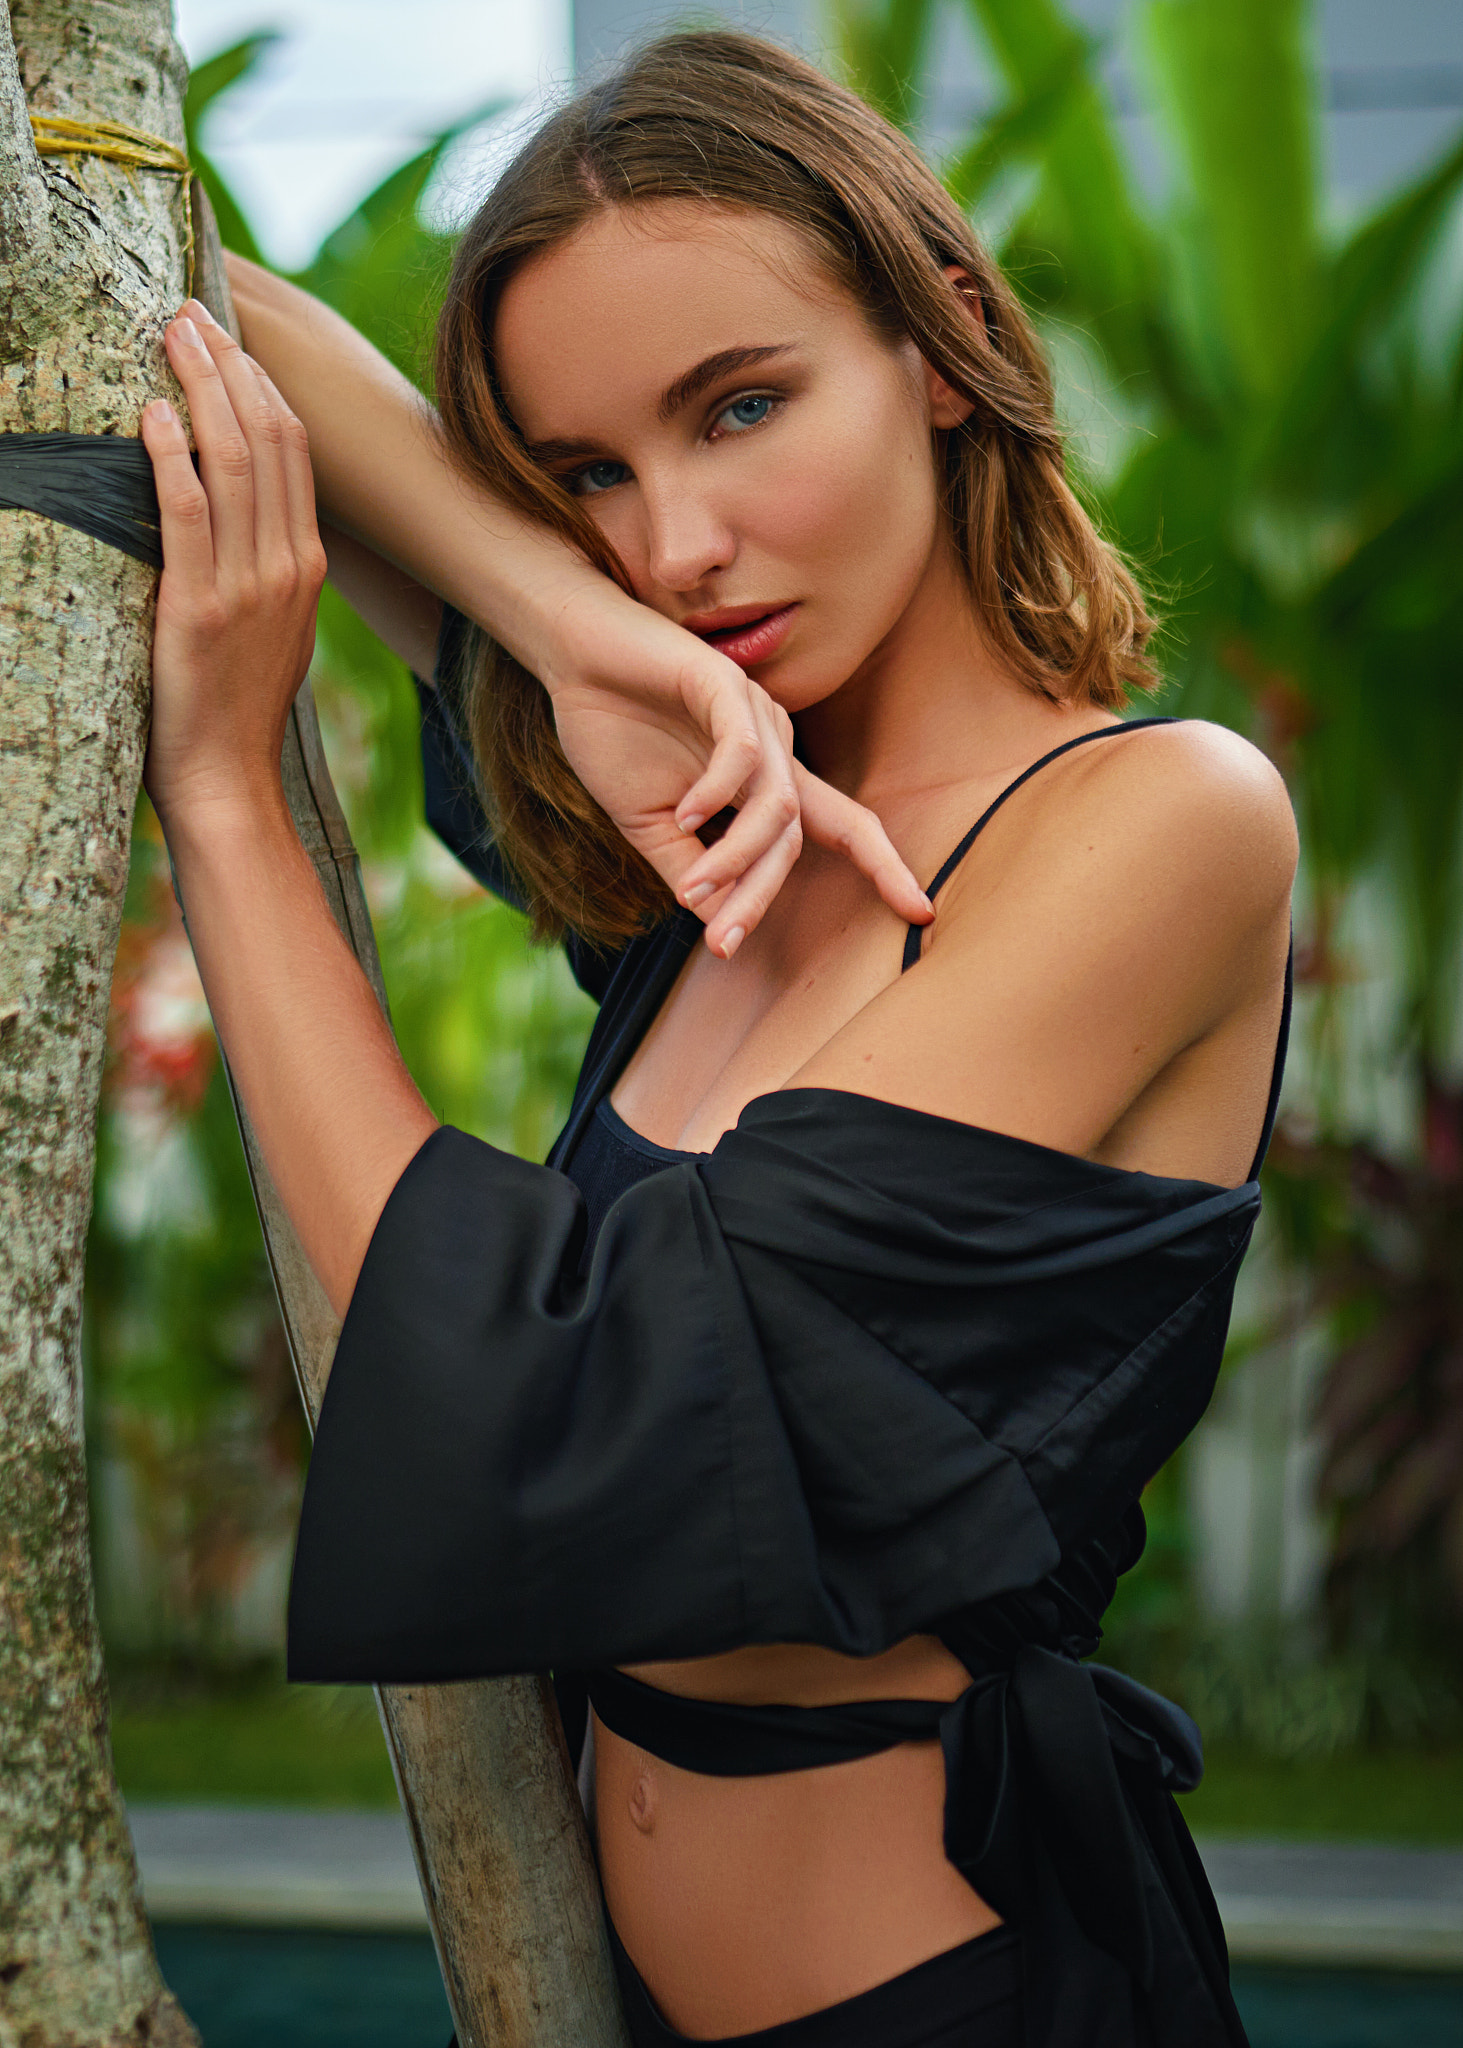 Sergey Zhirnov Women Brunette Blue Eyes Looking At Viewer Dress Black Clothing Tree Bark Plants Tann 1463x2048